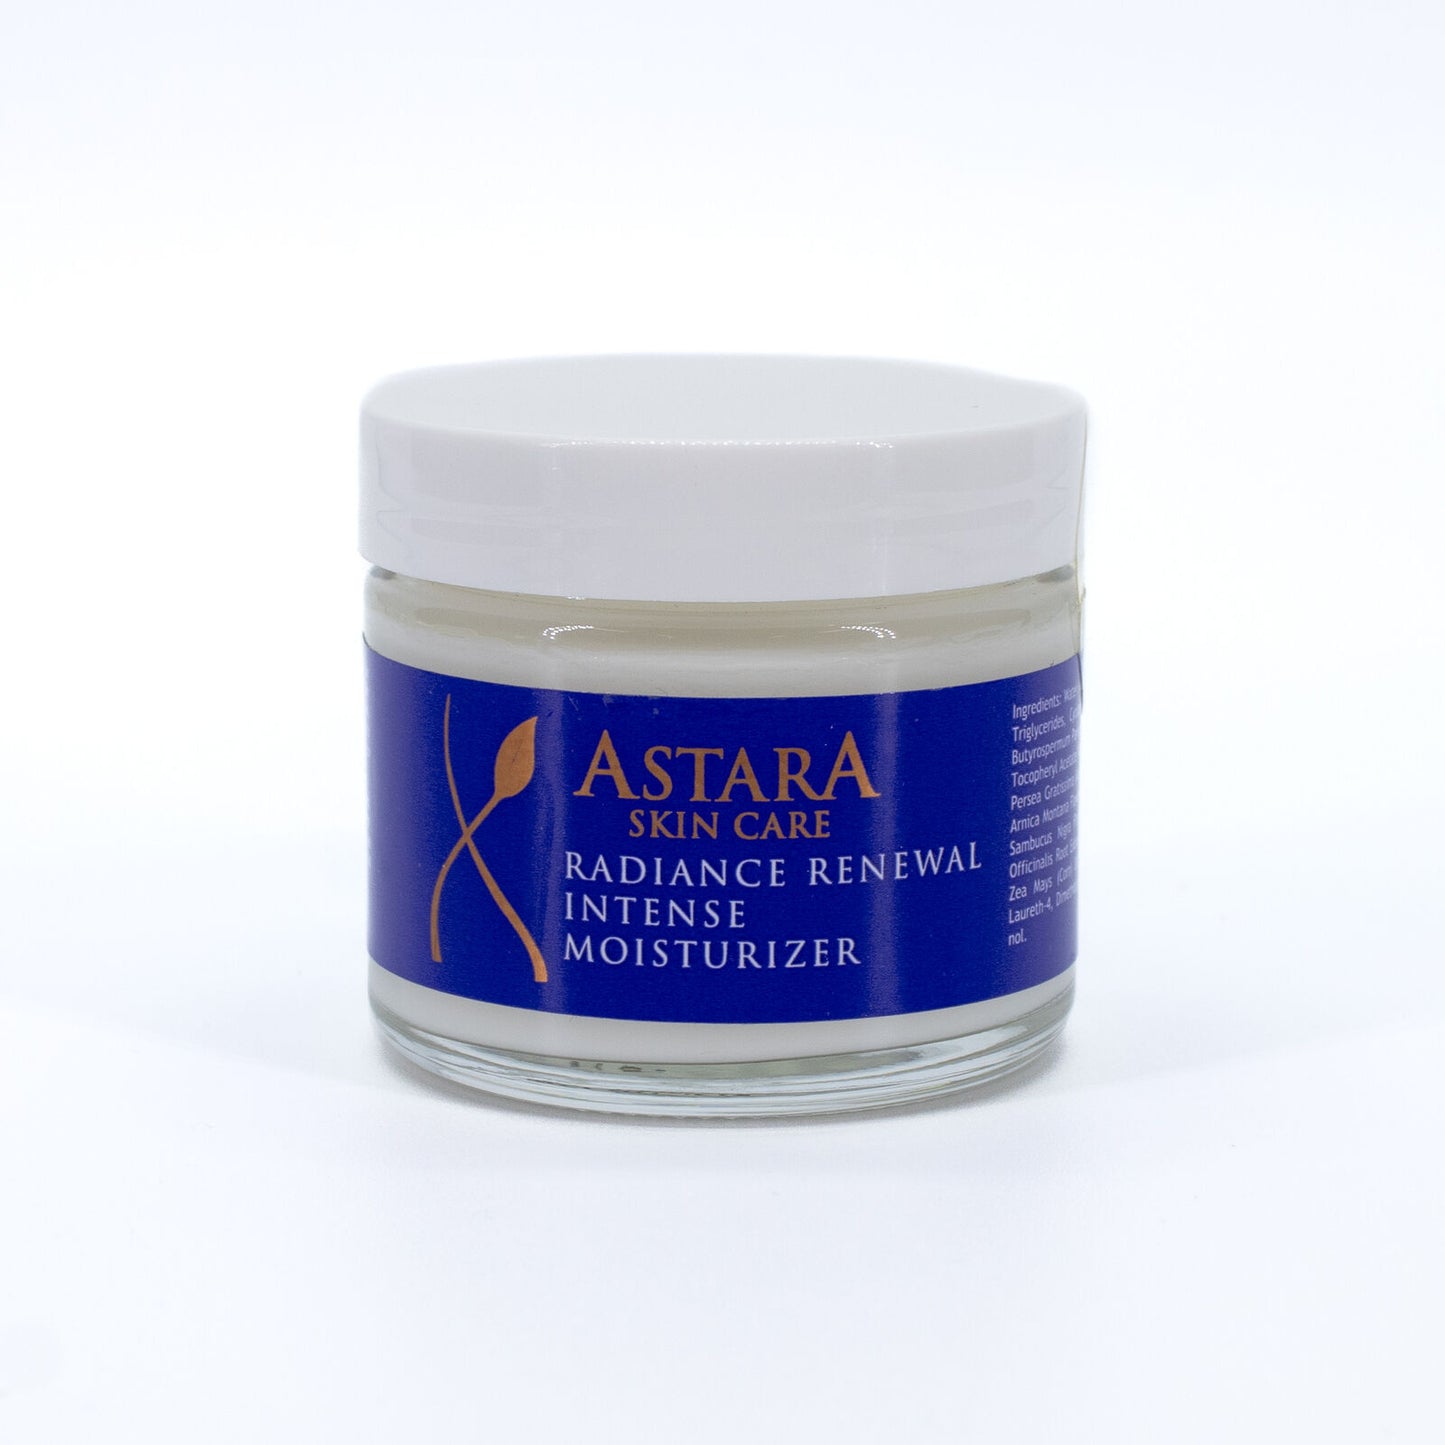 ASTARA Radiance Renewal Intense Moisturizer 2oz - New